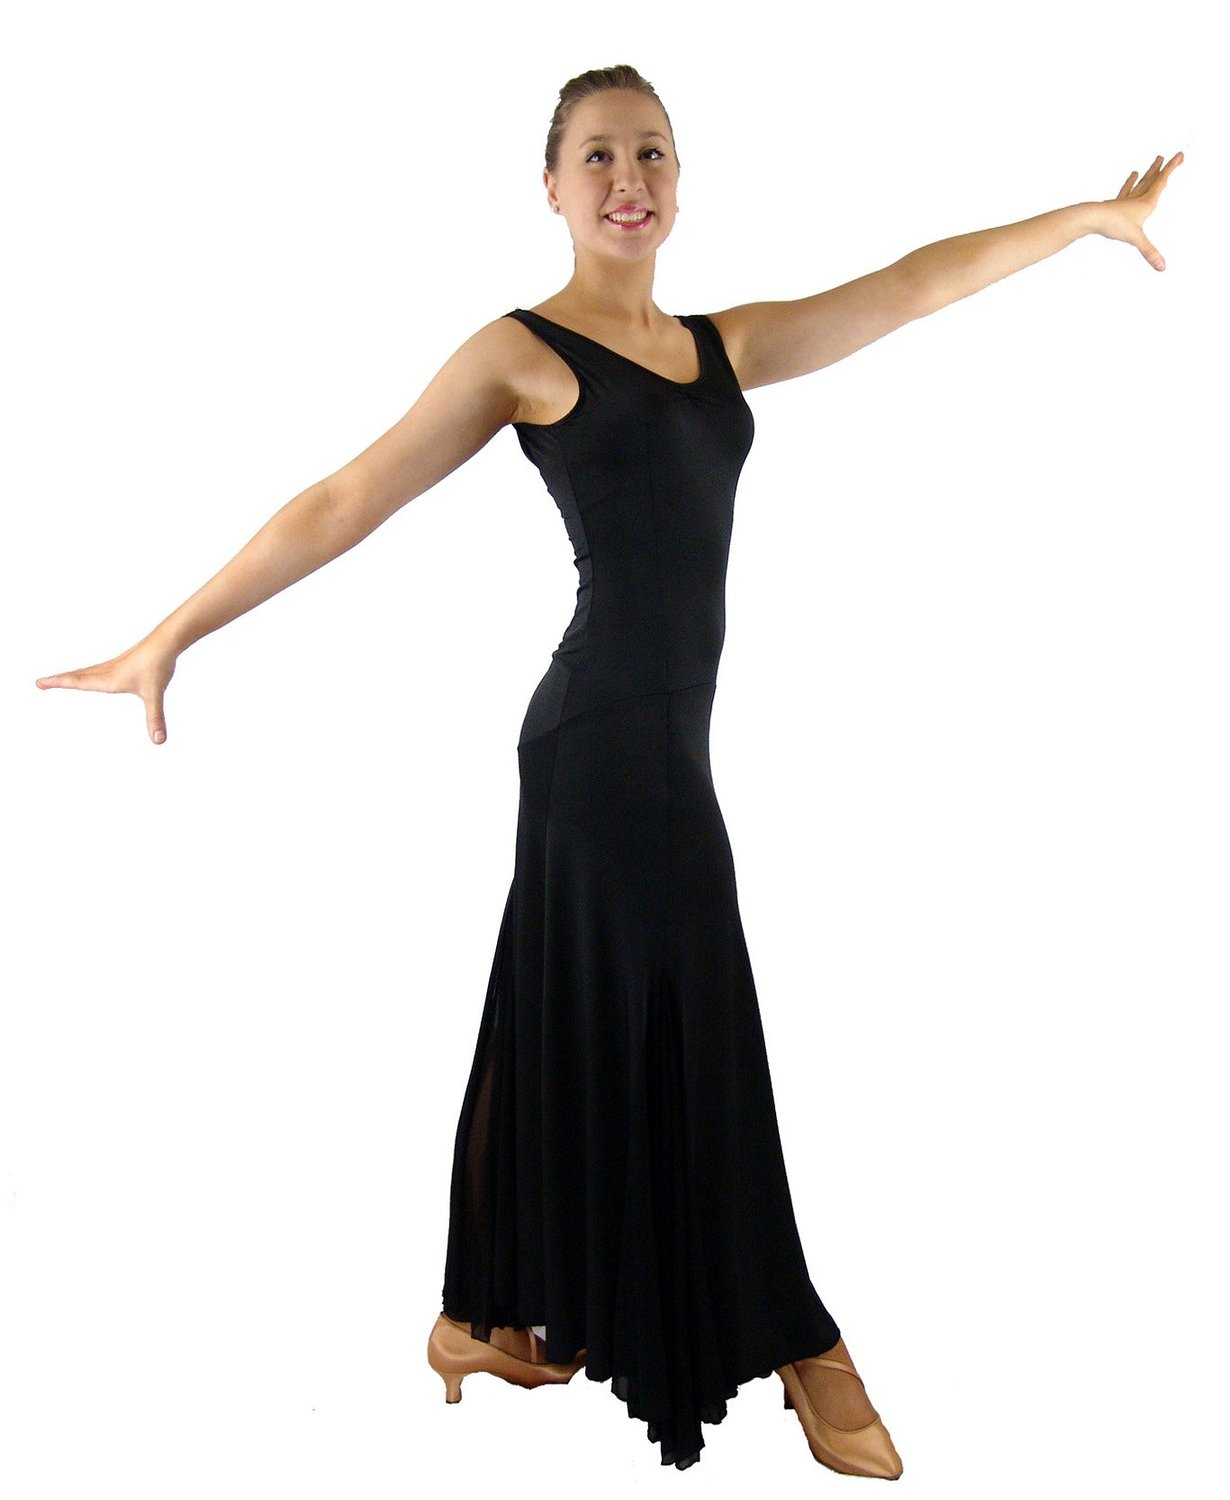 Hdyee Women's Irregular Pleated Swing Tassels Cha Cha Rumba Tango Latin Dance Dress